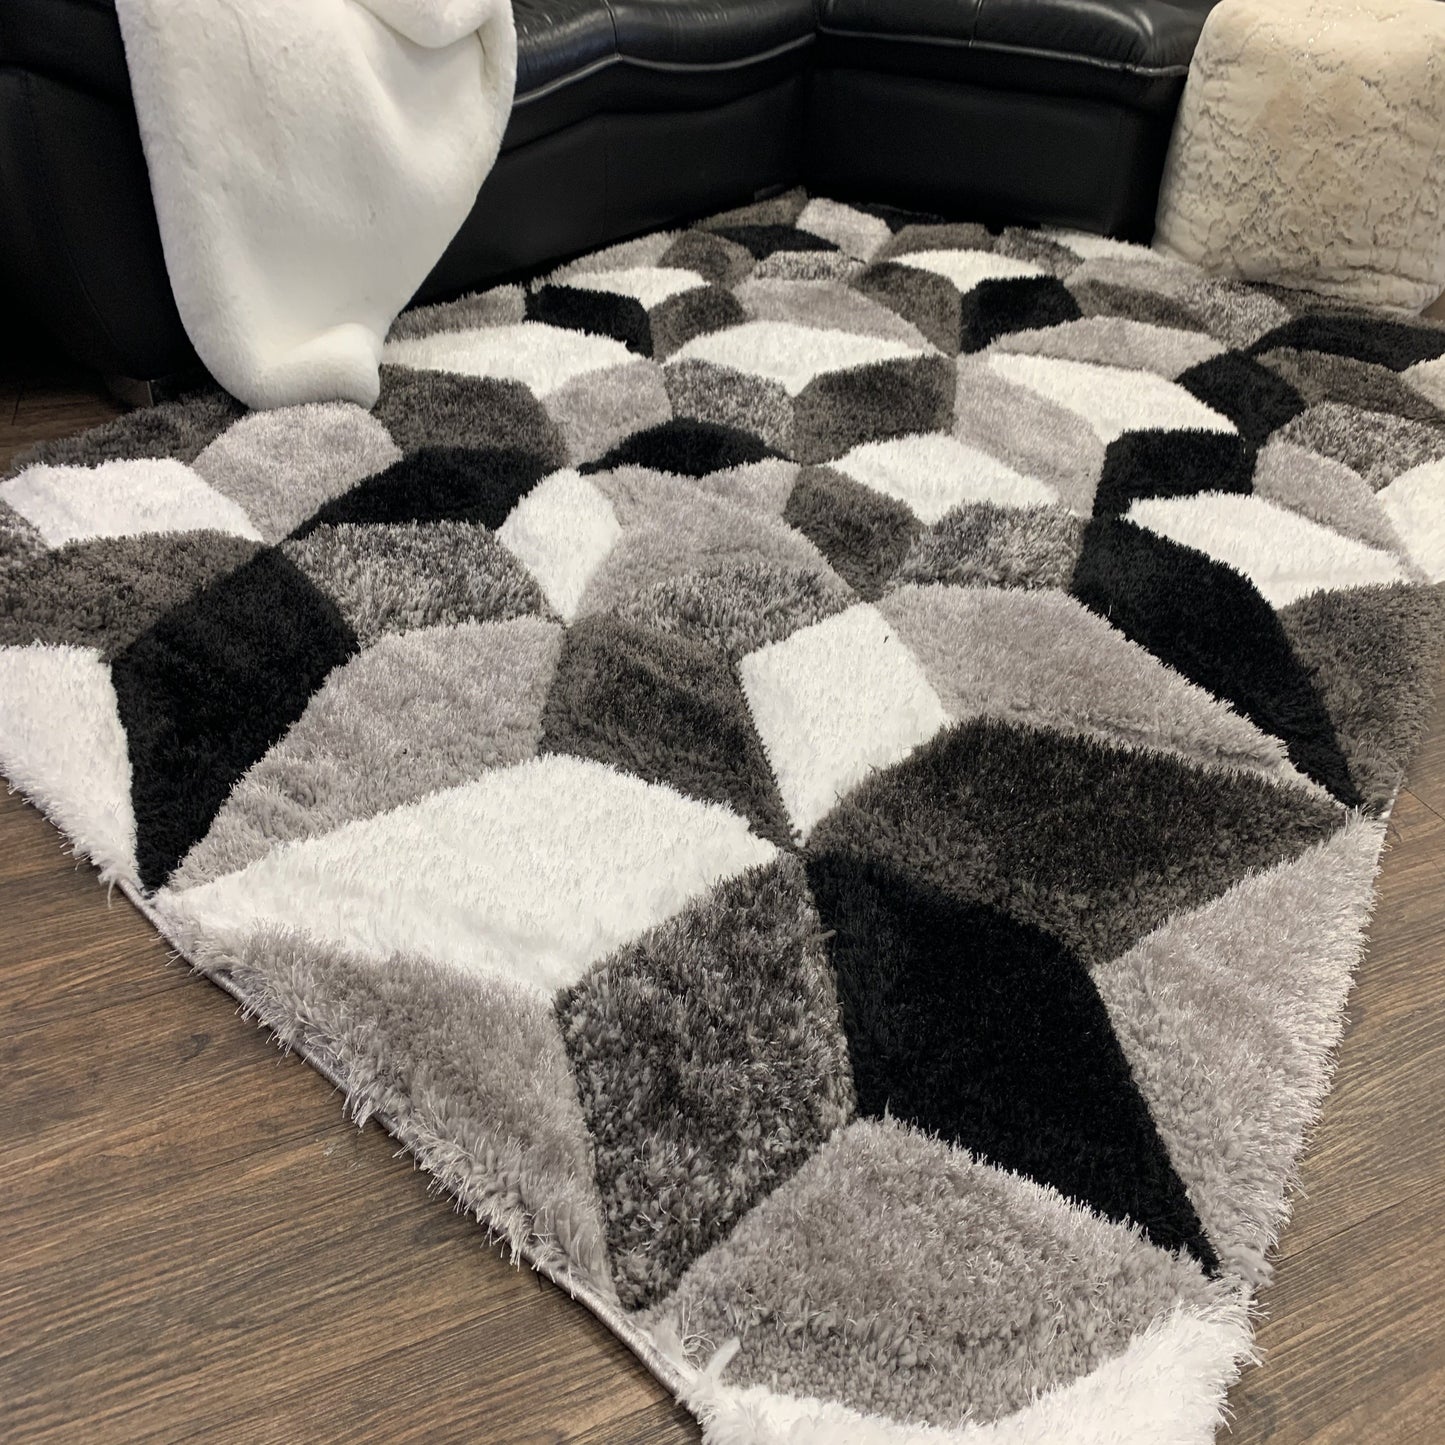 Plush Fluffy Shine 3D Geometric Silver Black White Shag Area Rug/Carpet